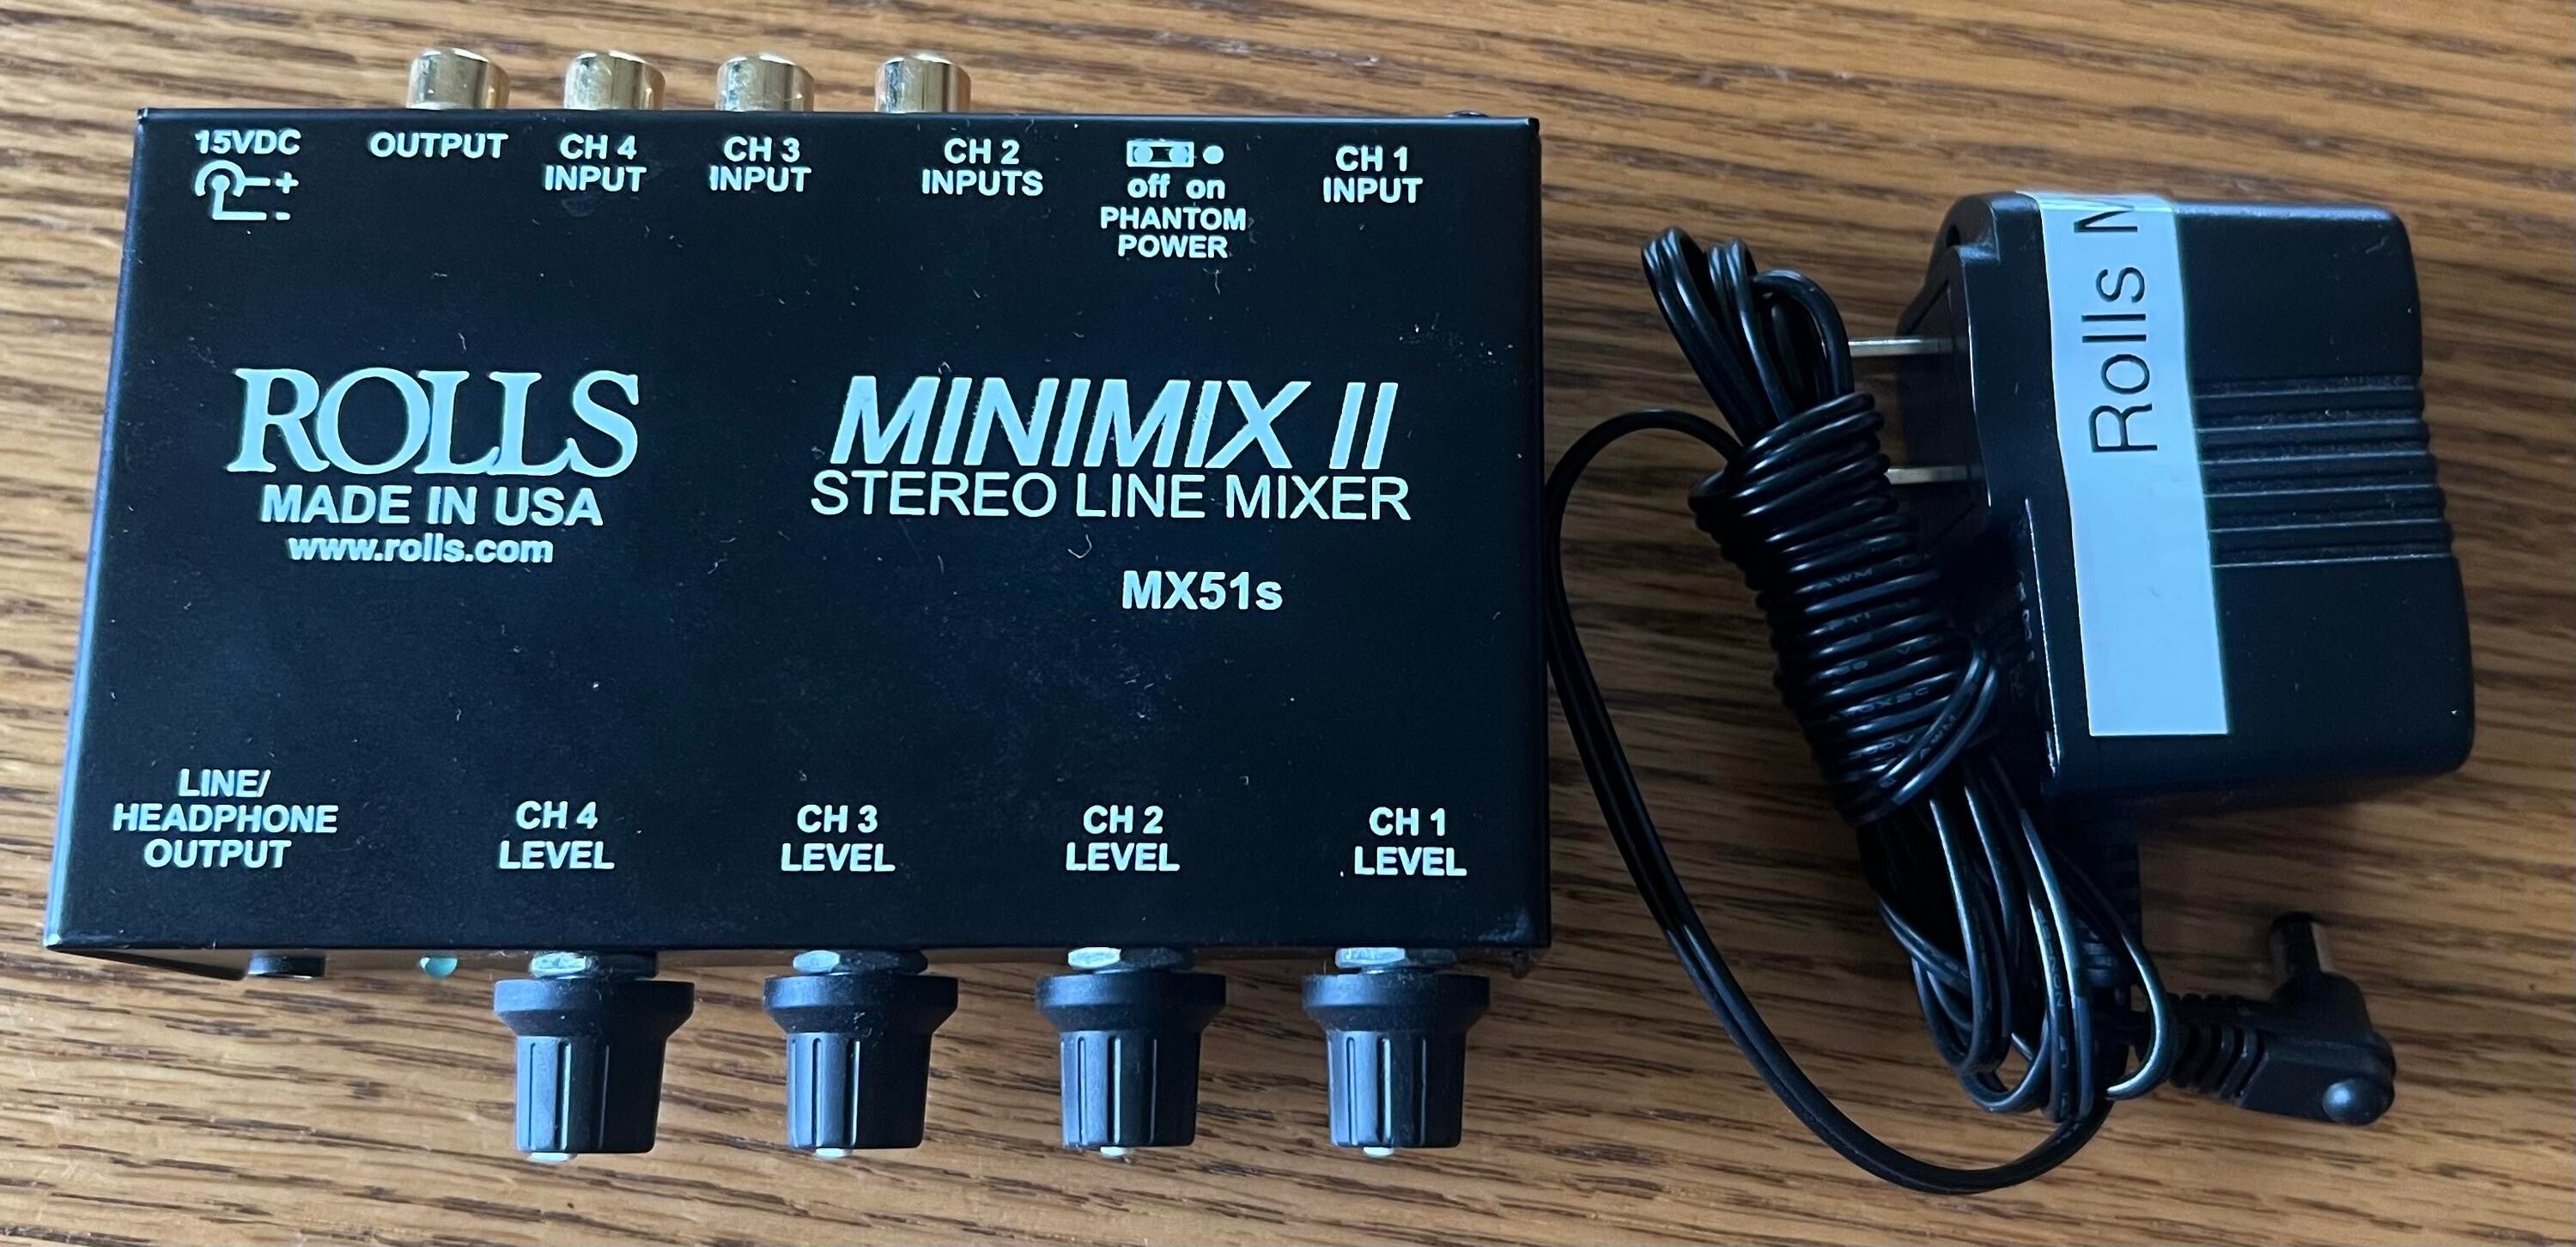 Fibertique Cloth Rolls MX51s Mini-Mix II 4-Channel RCA Mixer and Accessory Bundle w/ 4X 2 RCA Male Cable Xpix Pro XLR Cable 